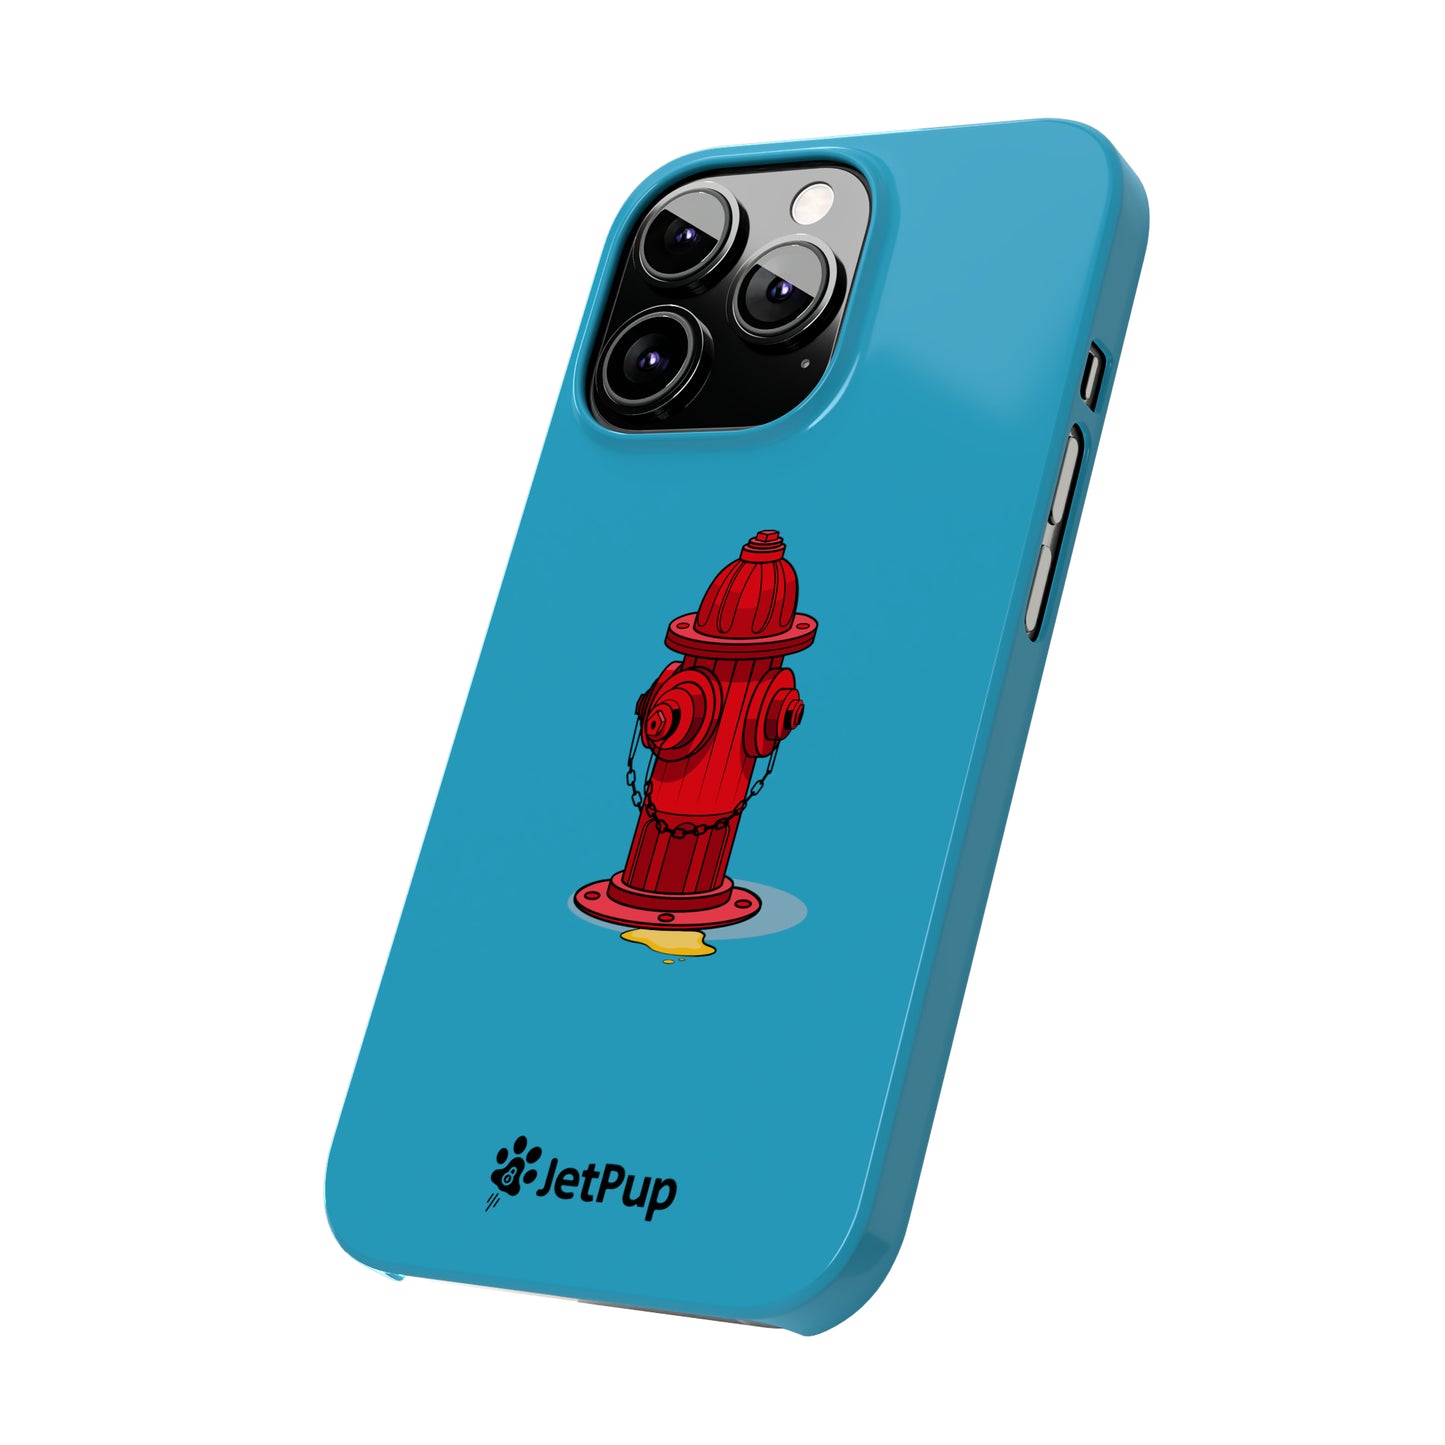 Hydrant Slim iPhone Cases - Turquoise